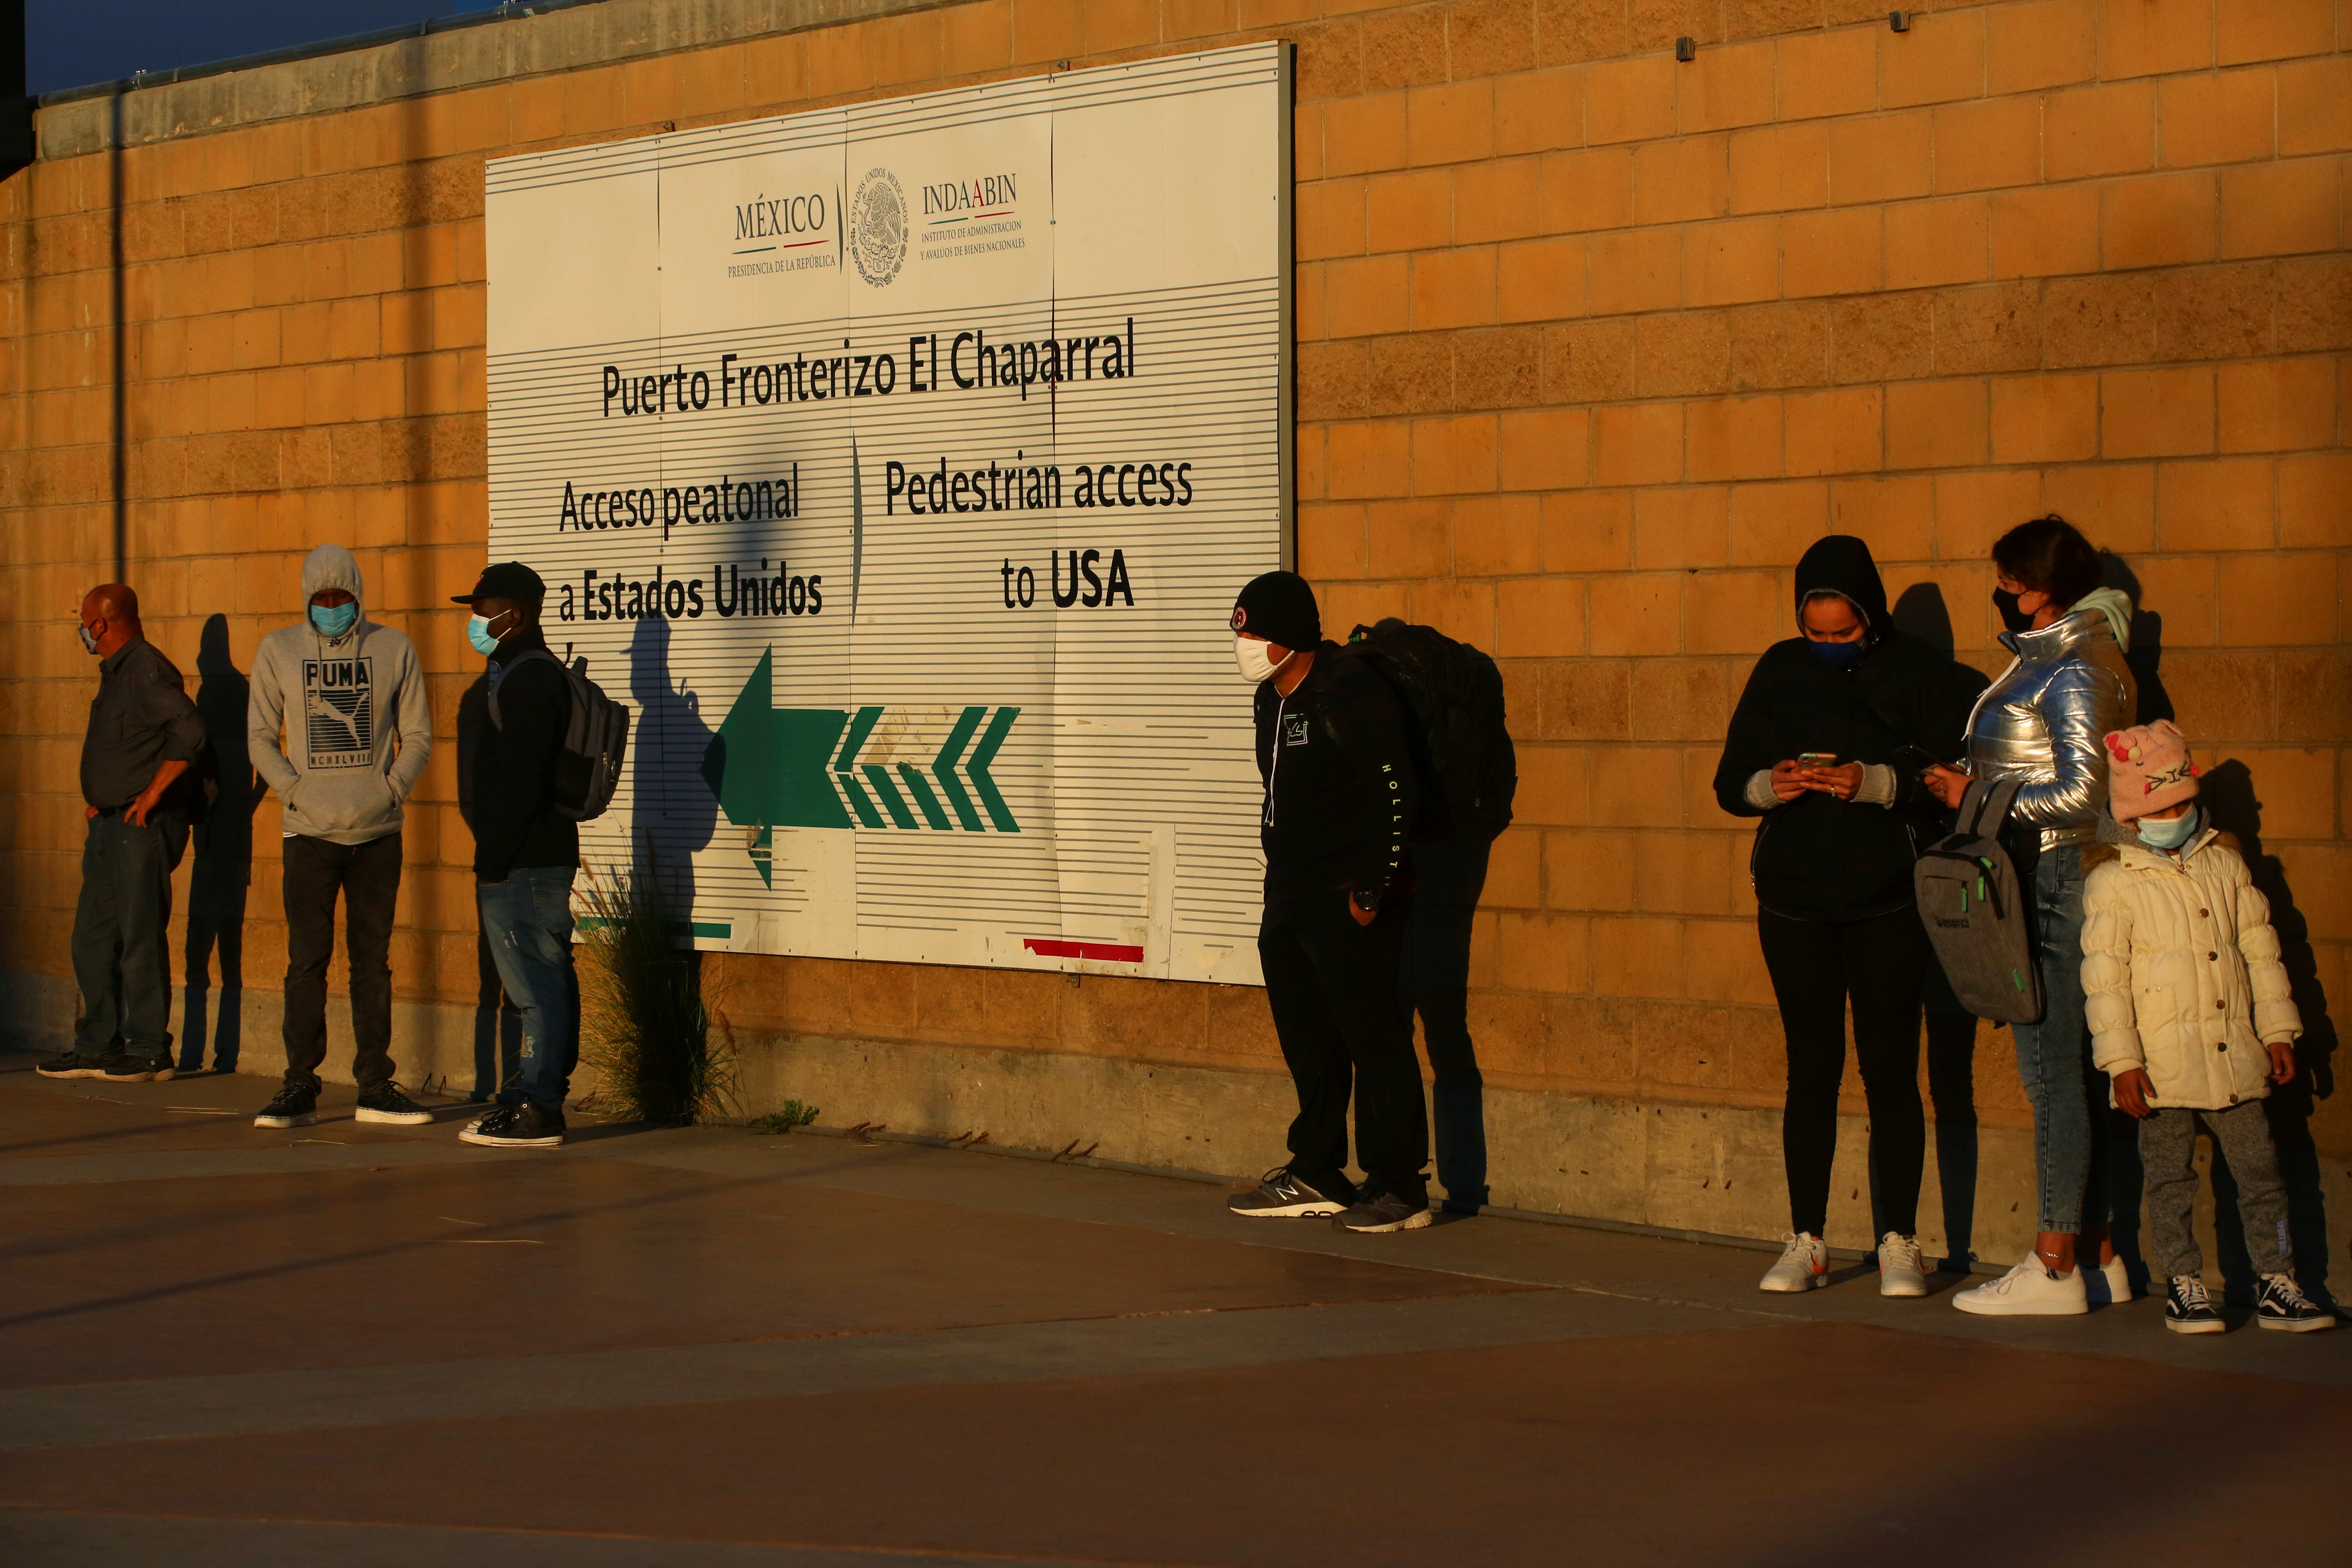 Migrants queue at the El Chaparral border crossing point to seek asylum in the U.S., in Tijuana